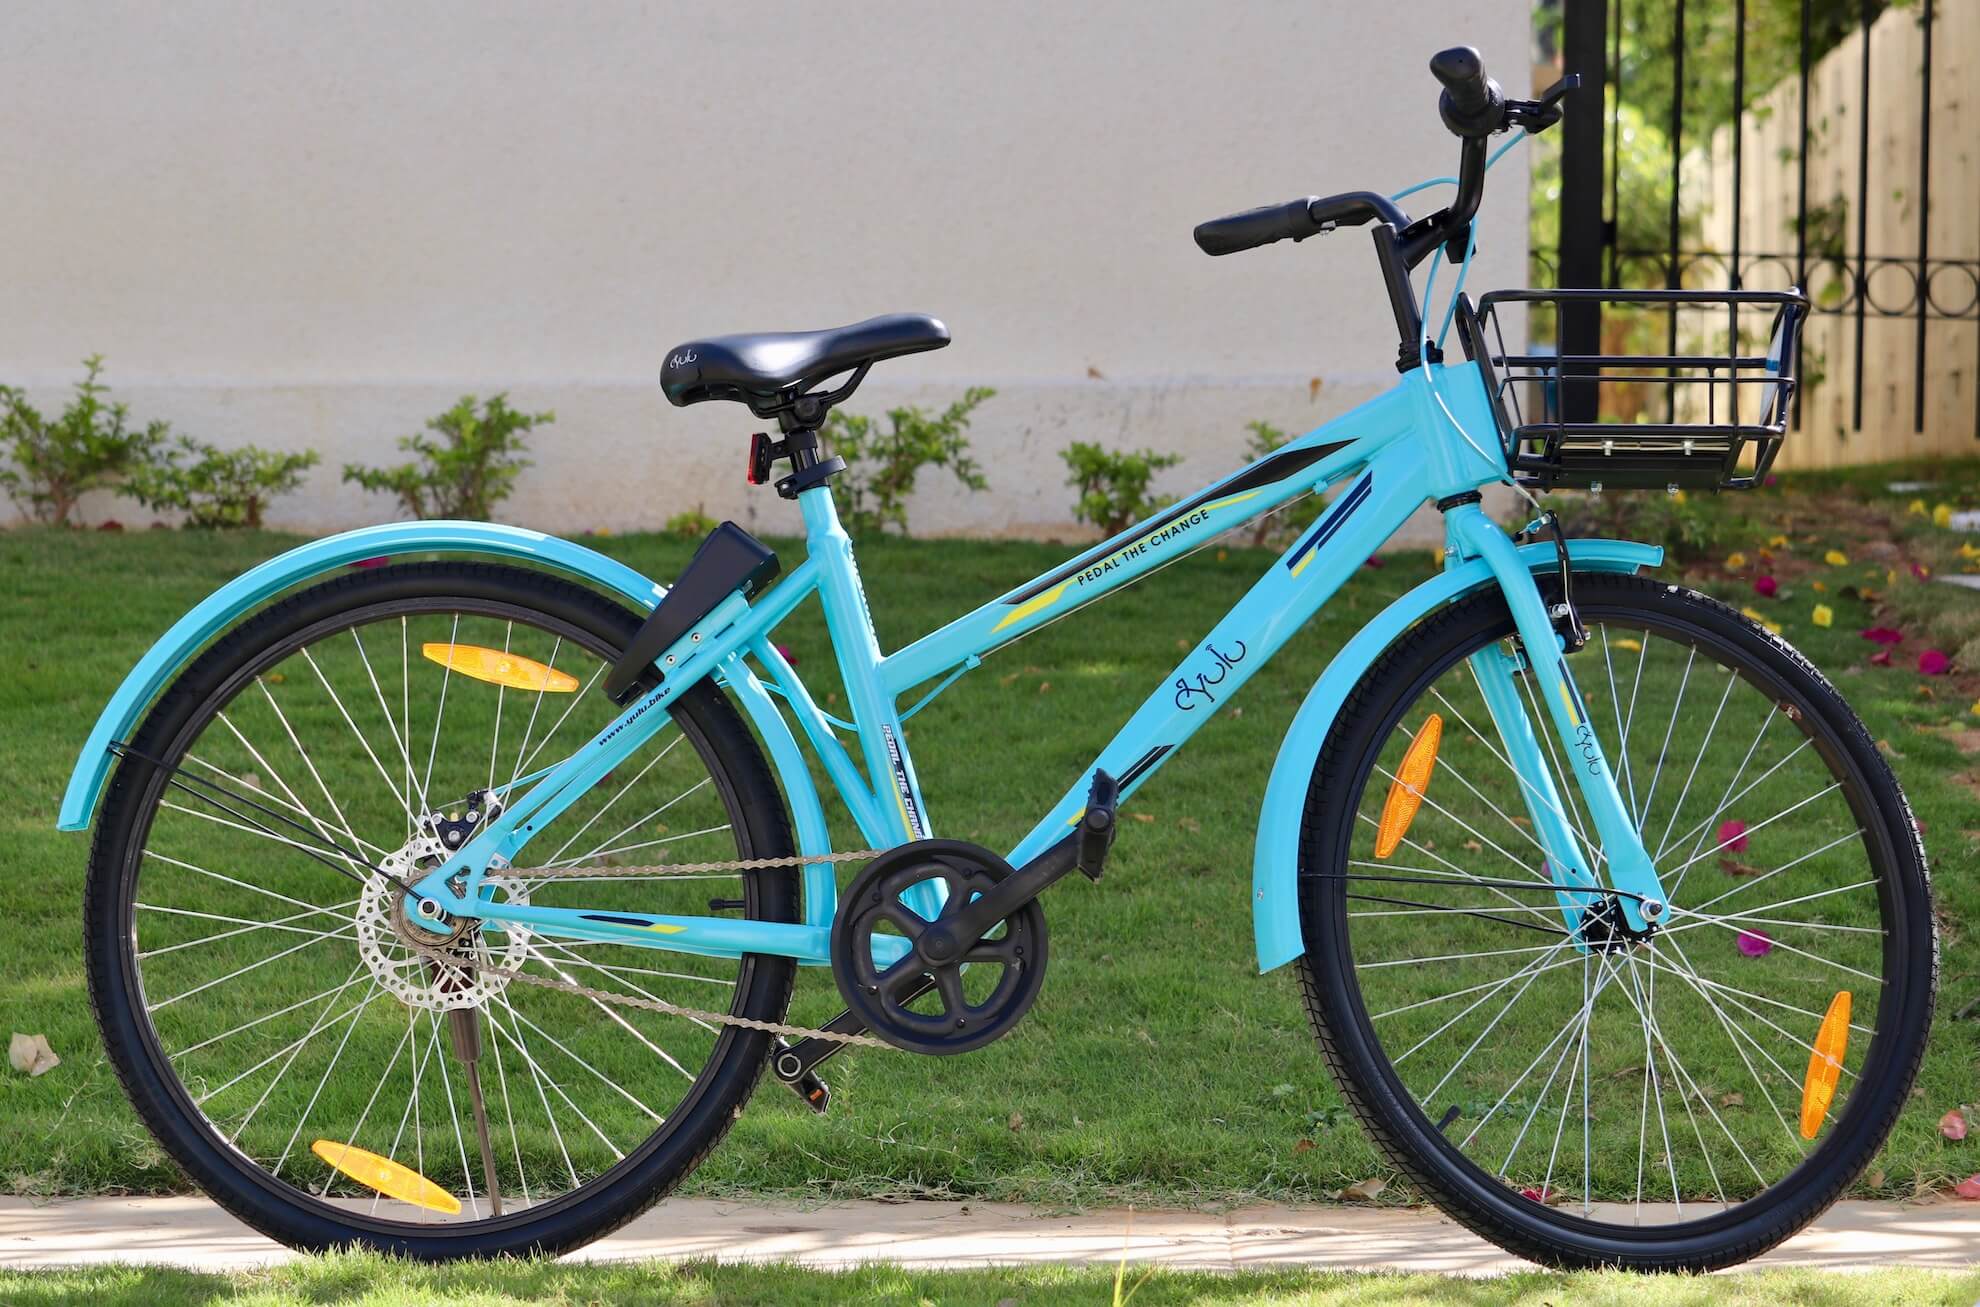 yulu bikes for rent